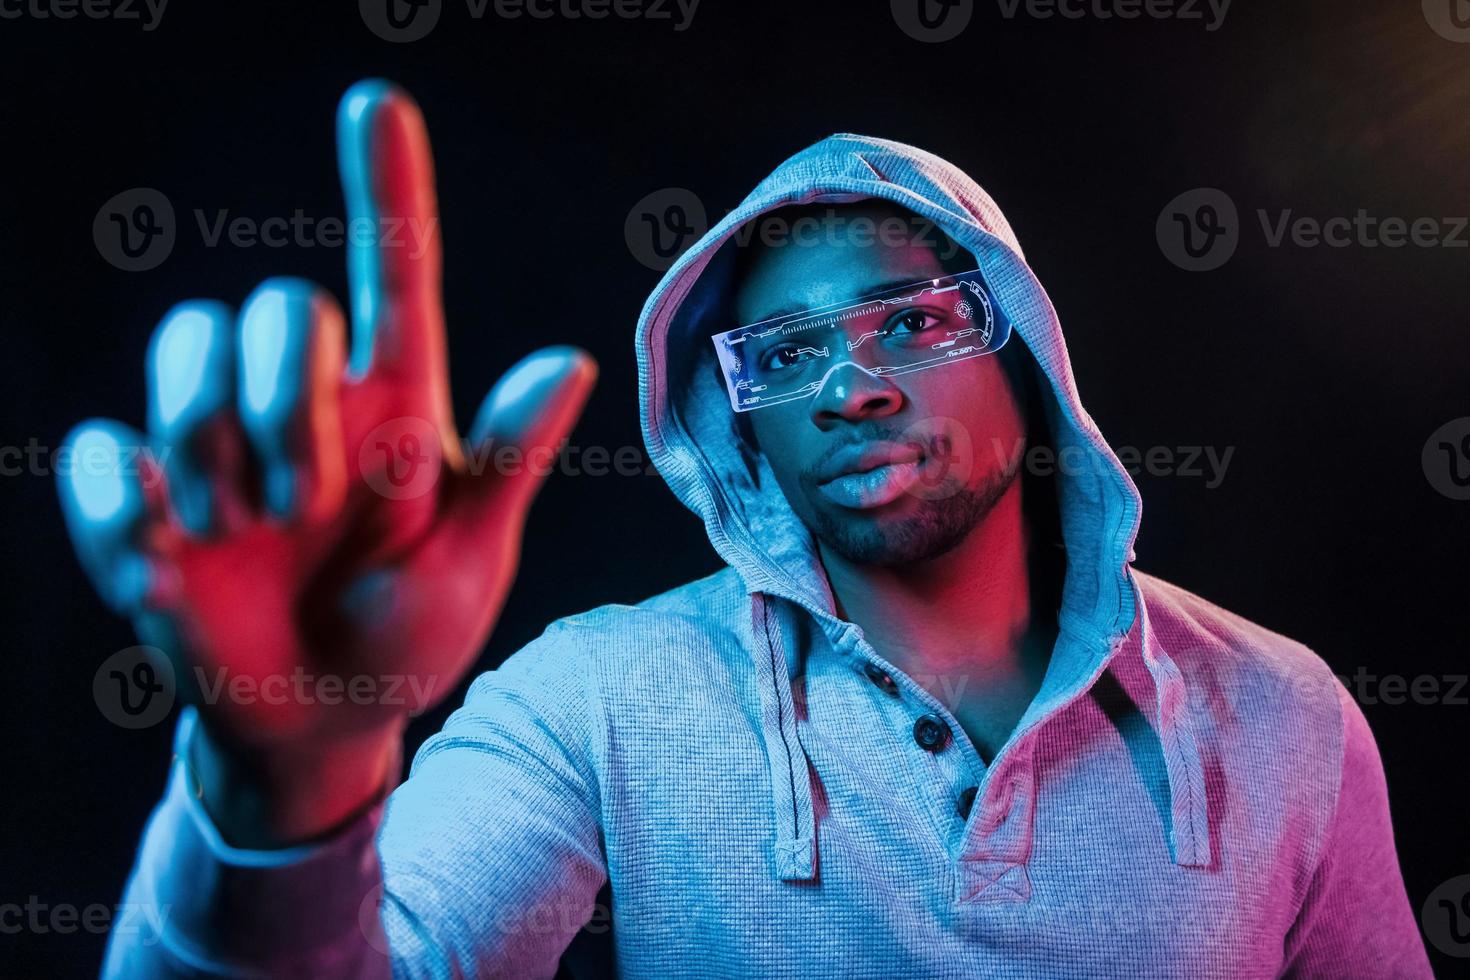 In special eyewear. Futuristic neon lighting. Young african american man in the studio photo